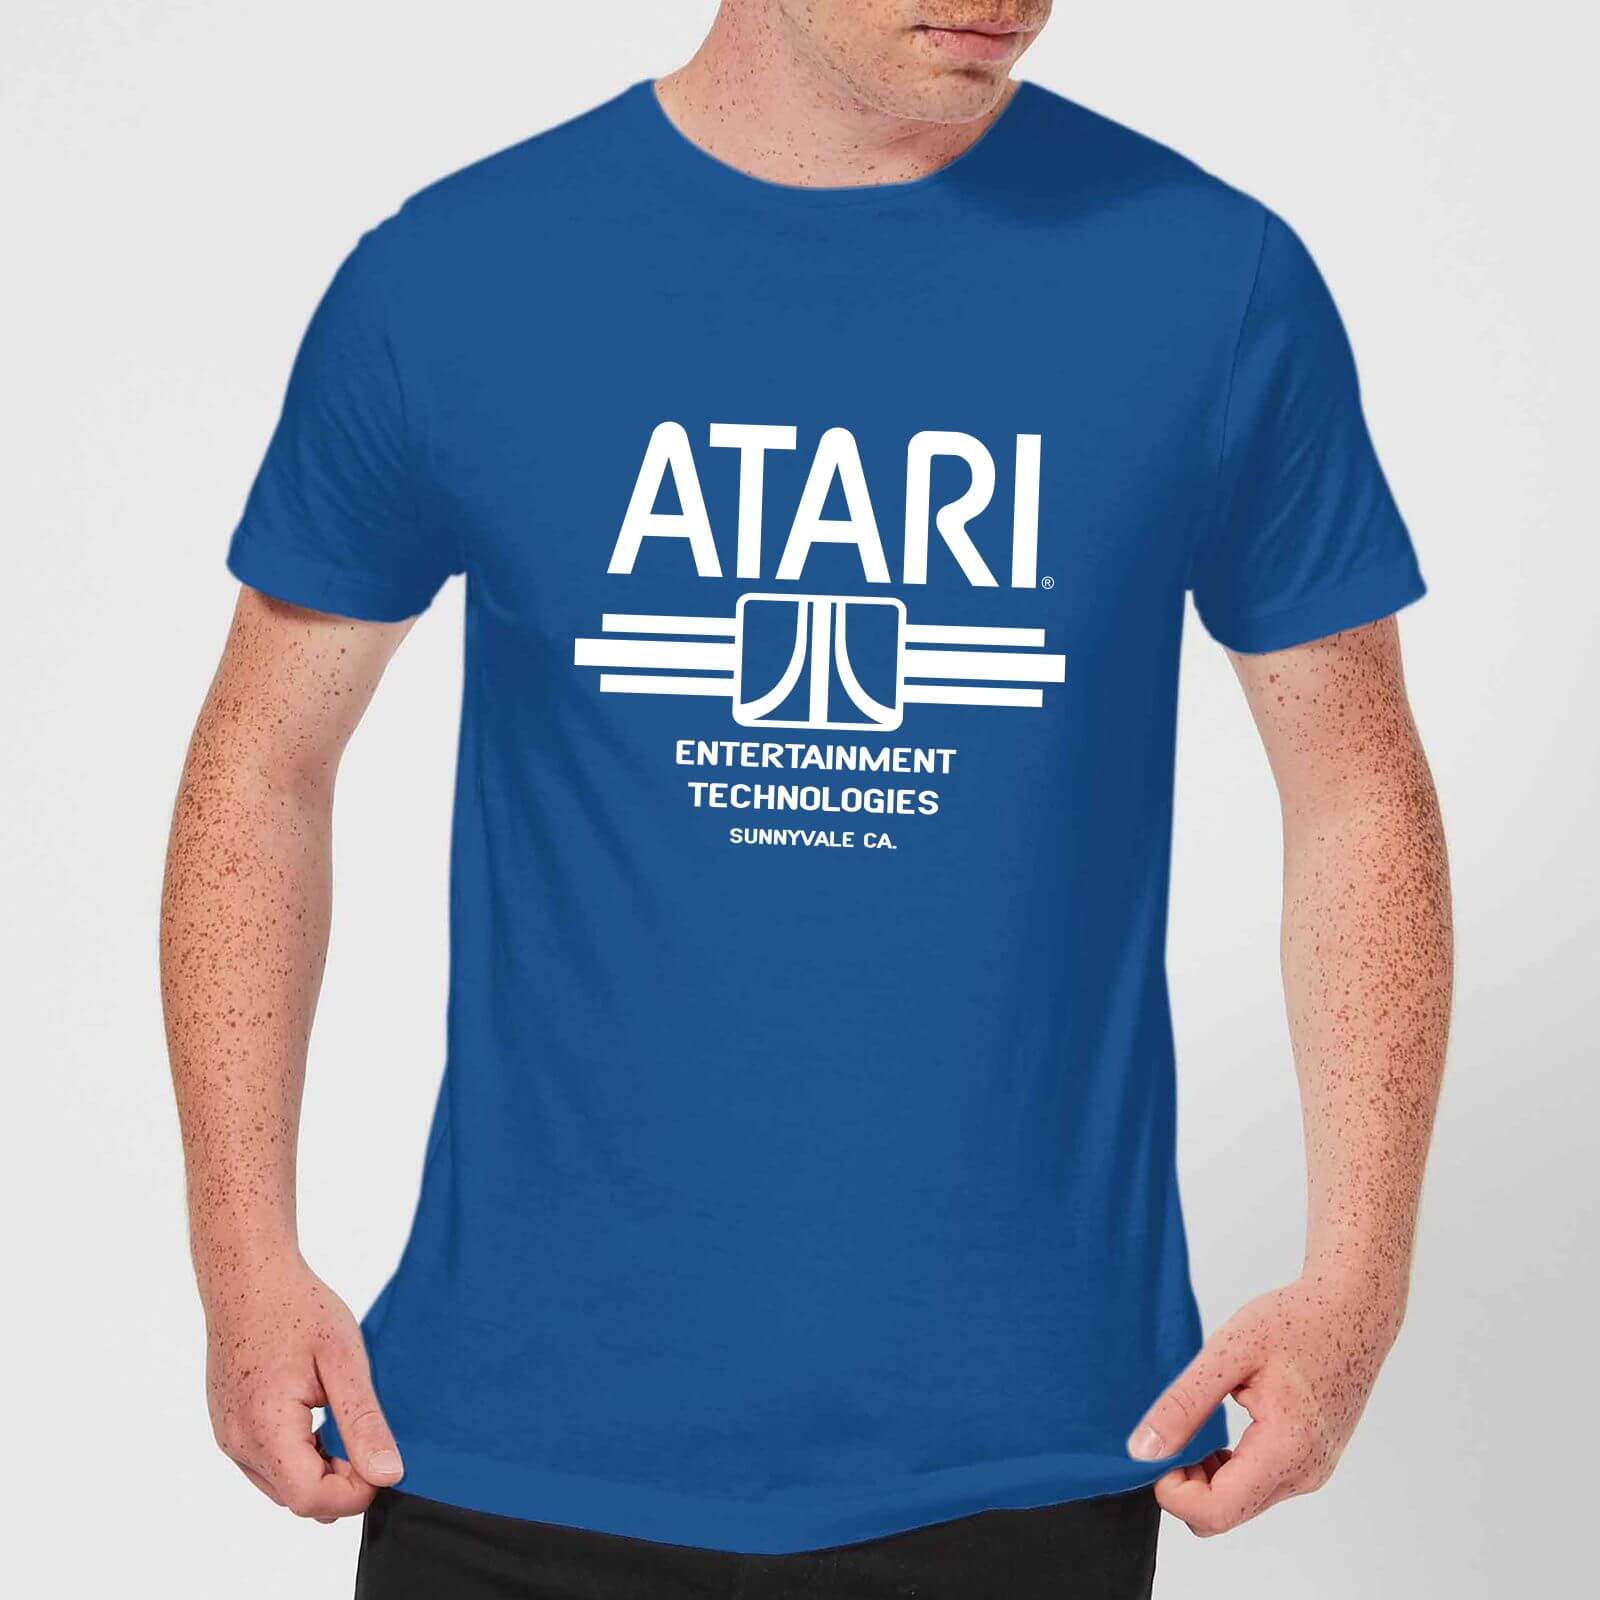 Atari Ent Tech Men's T-Shirt - Royal Blue - M